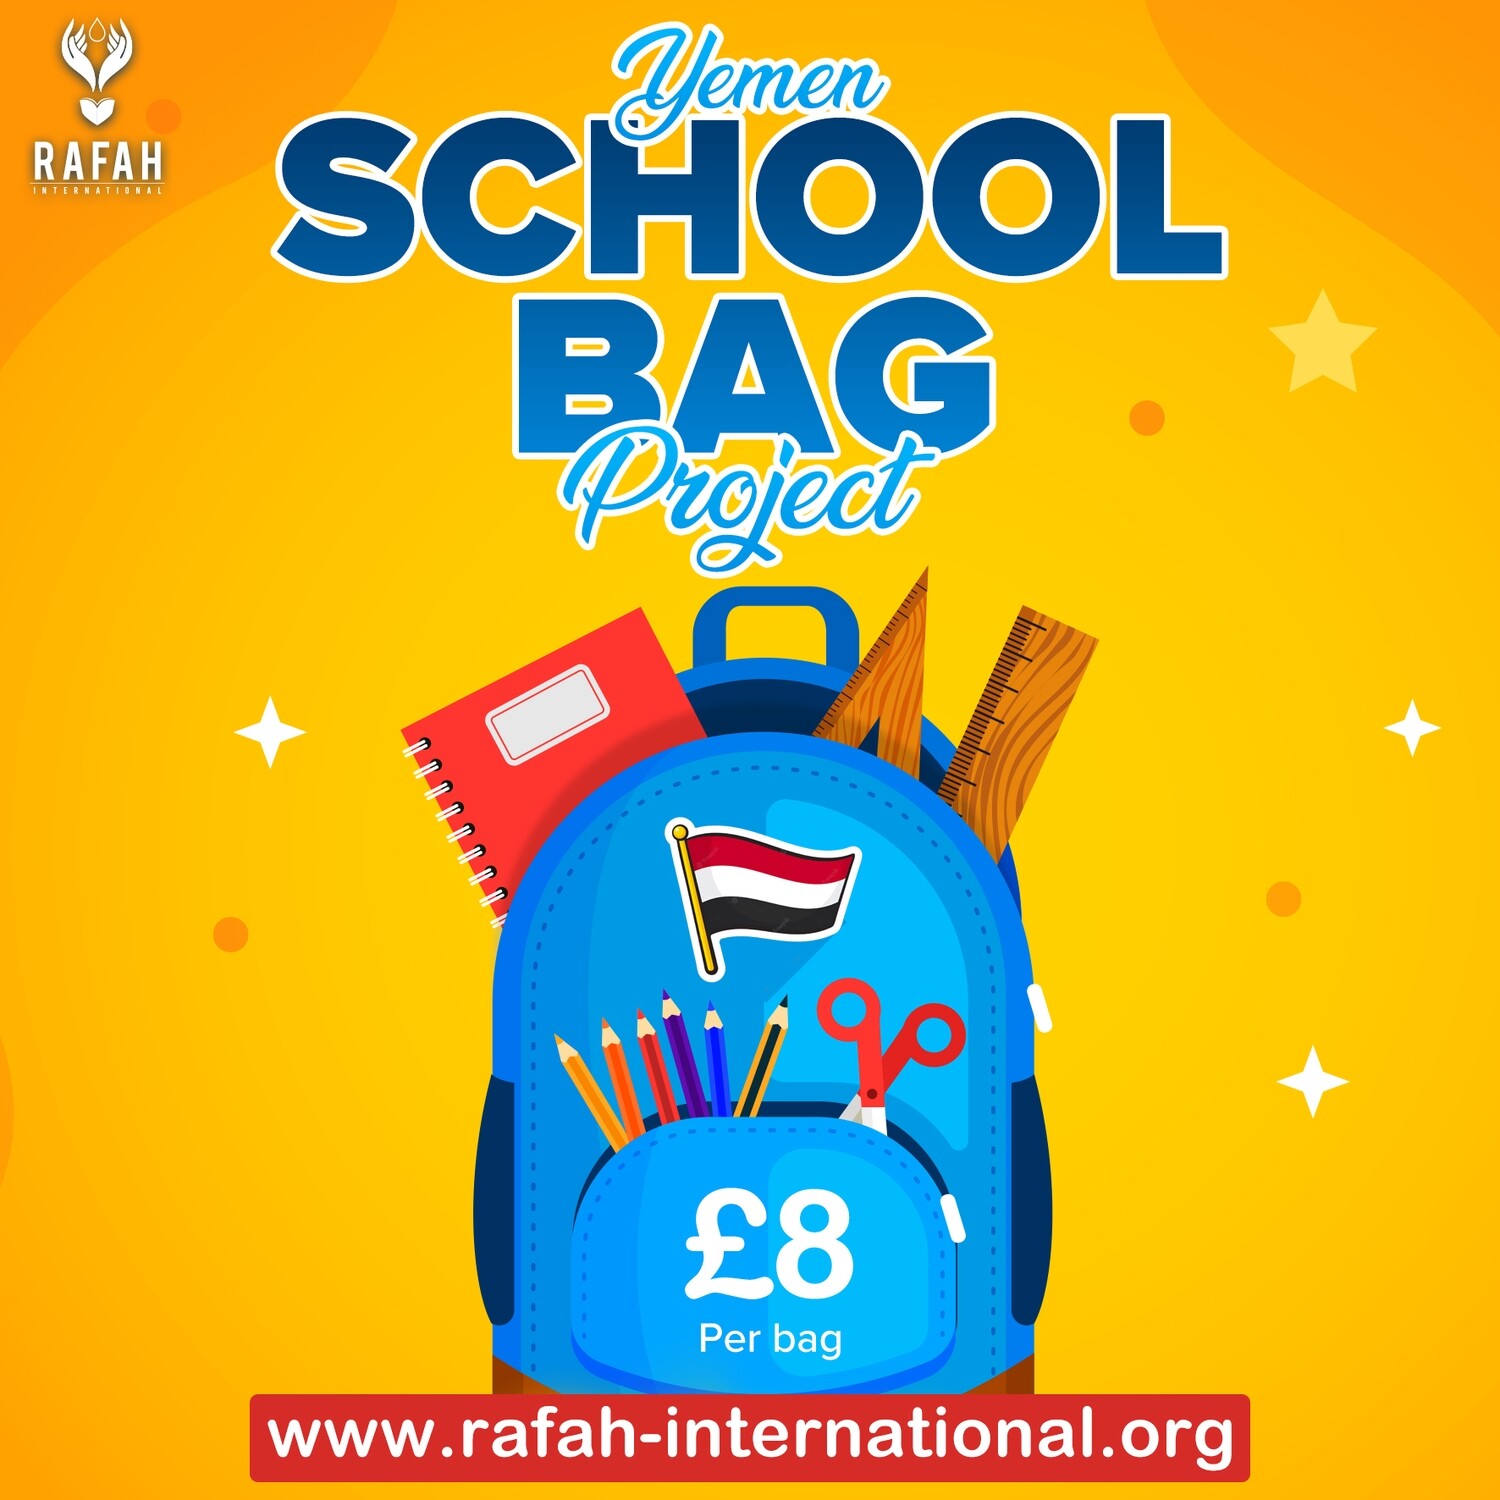 Rafah School Bag Project